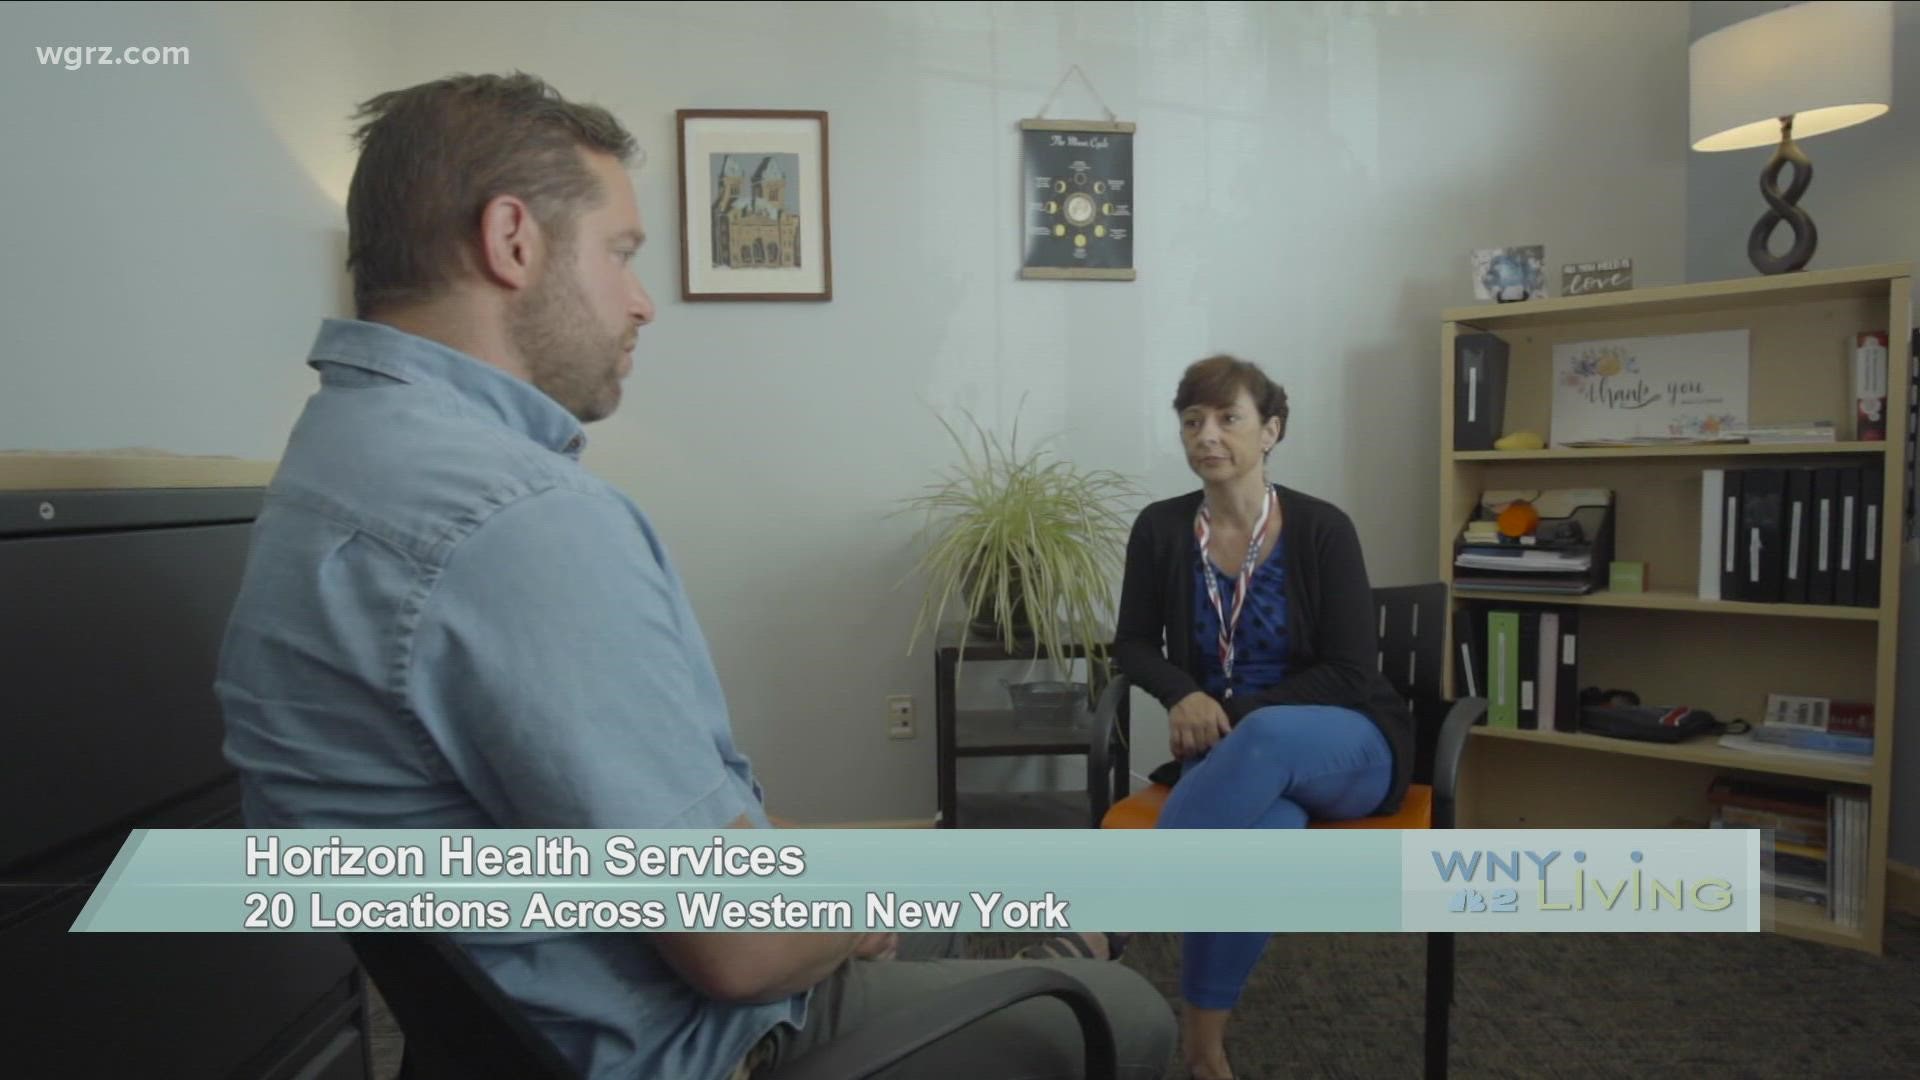 WNY Living - September 4 - Horizon Health Services (THIS VIDEO IS SPONSORED BY HORIZON HEALTH SERVICES)